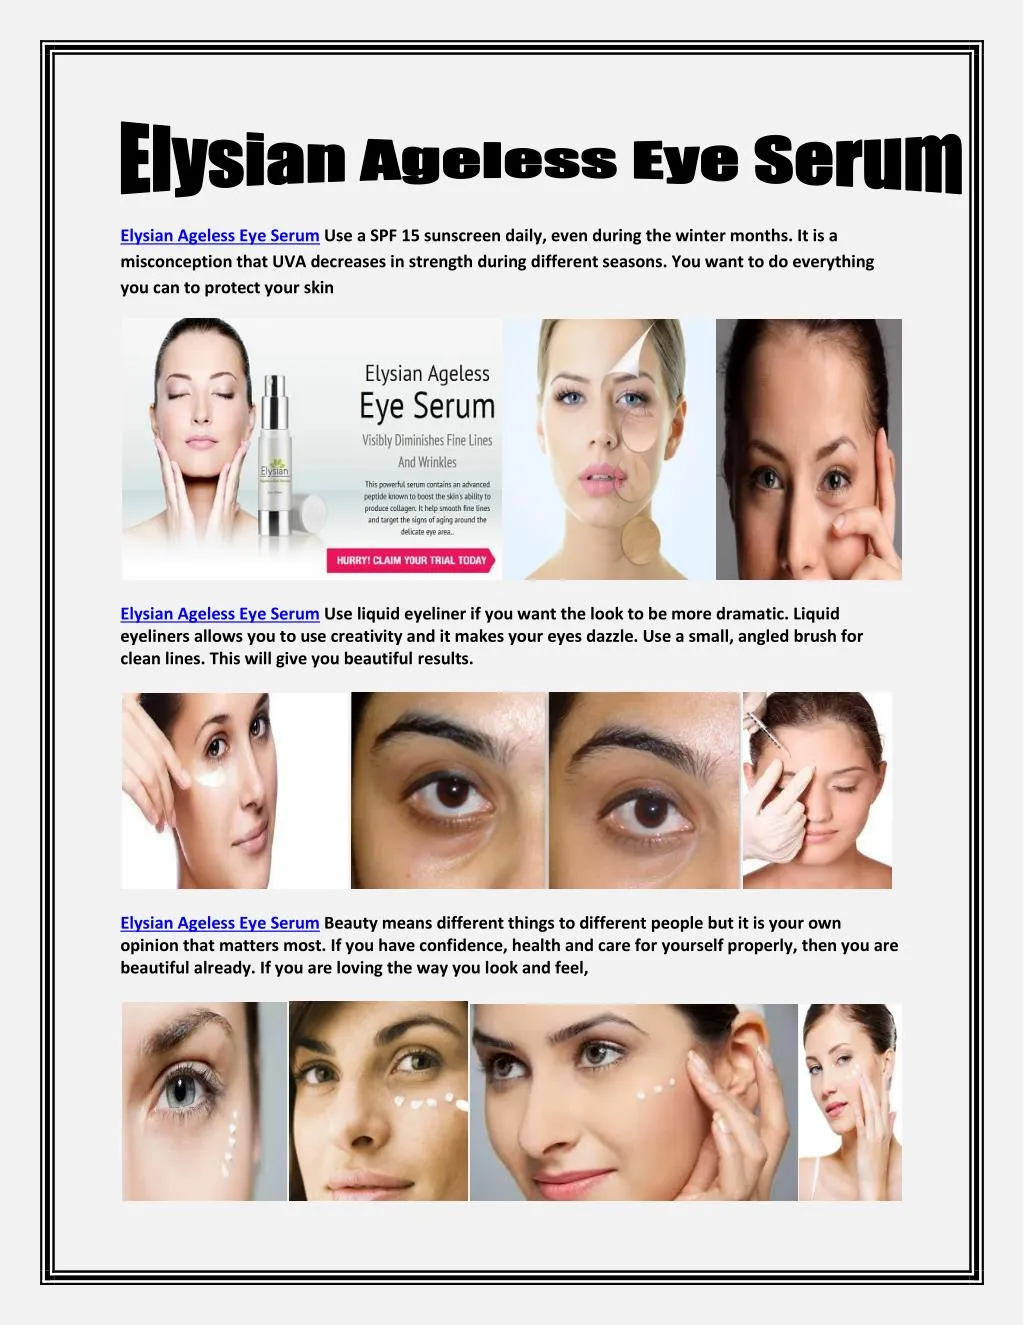 elysian ageless eye serum use a spf 15 sunscreen